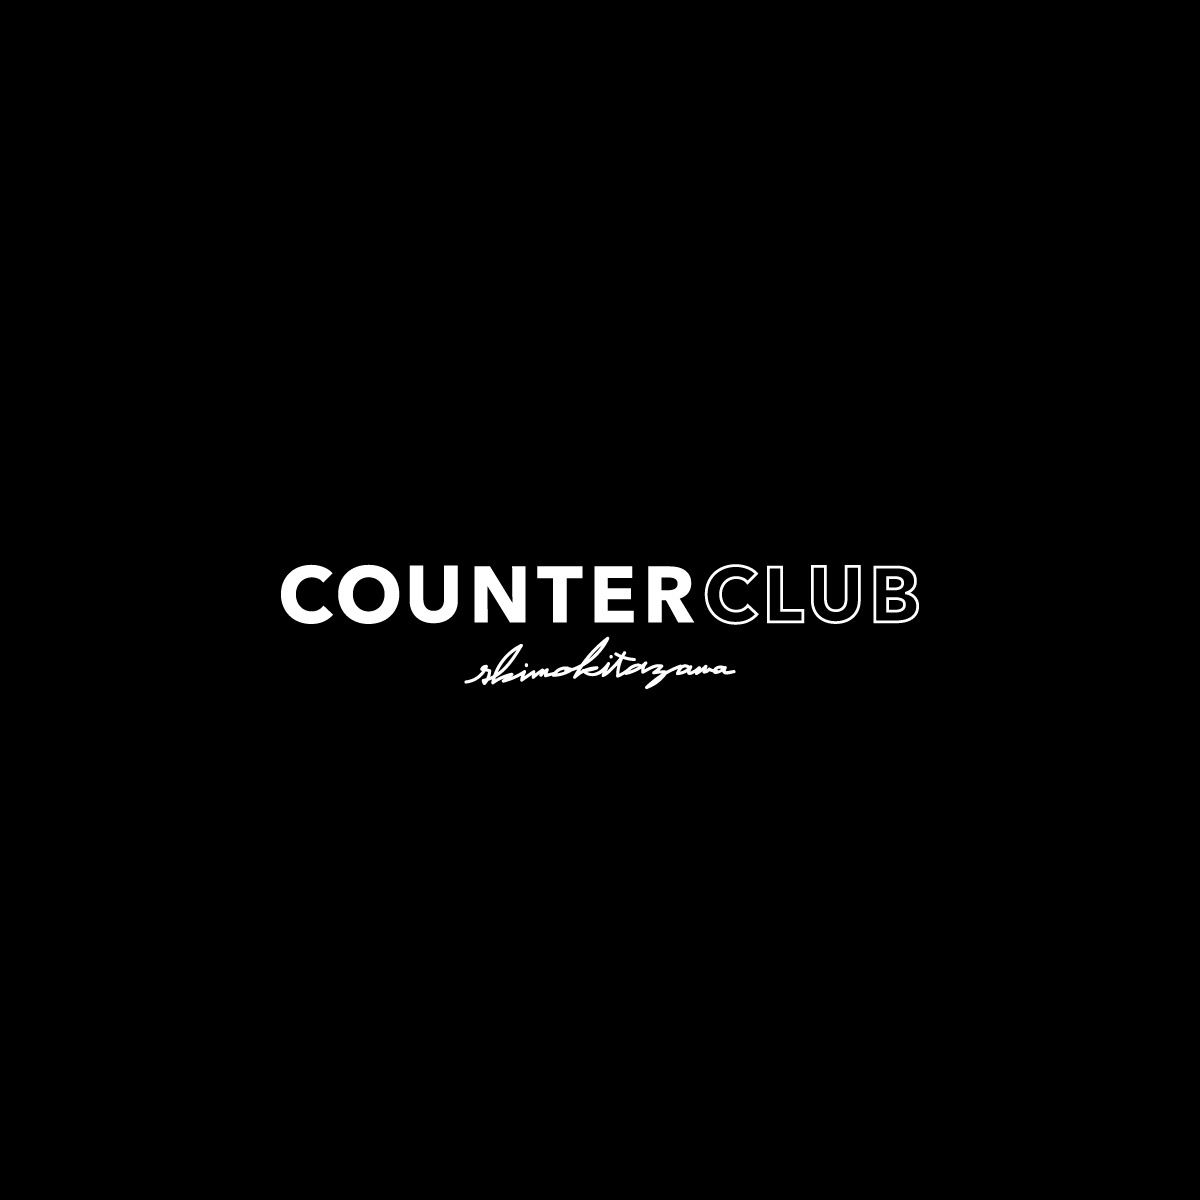 COUNTER CLUB